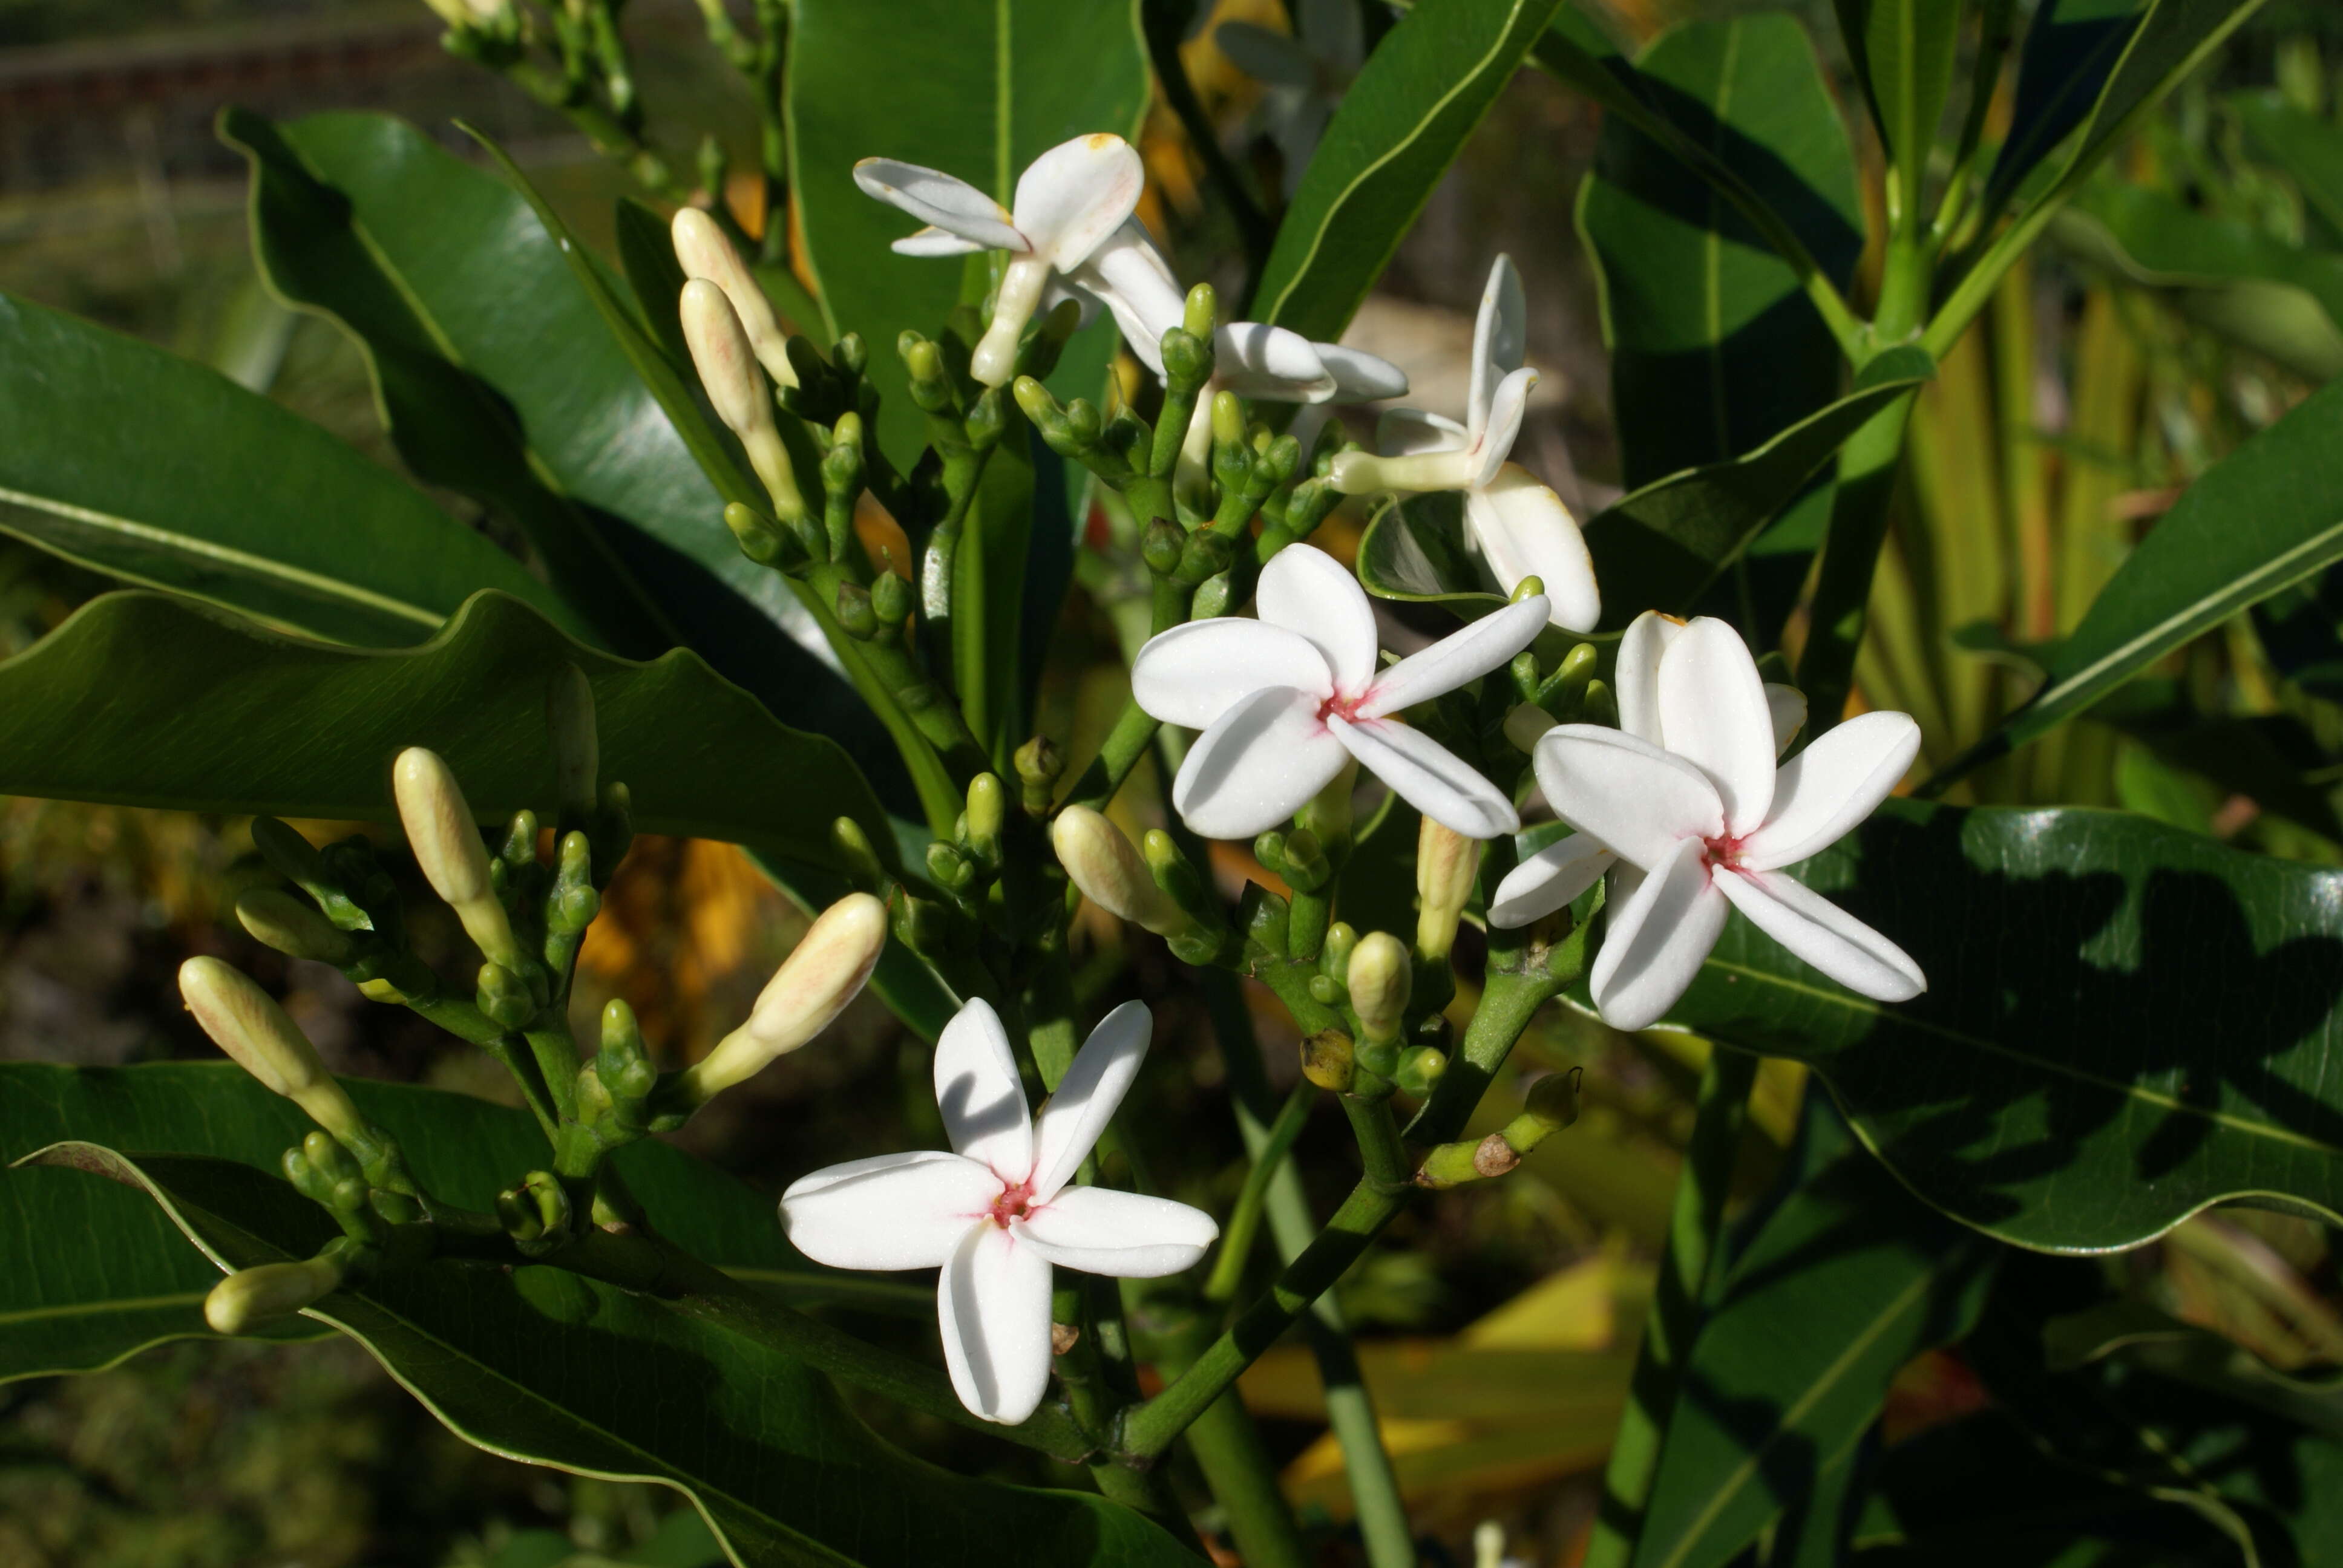 Image of Ochrosia borbonica J. F. Gmel.